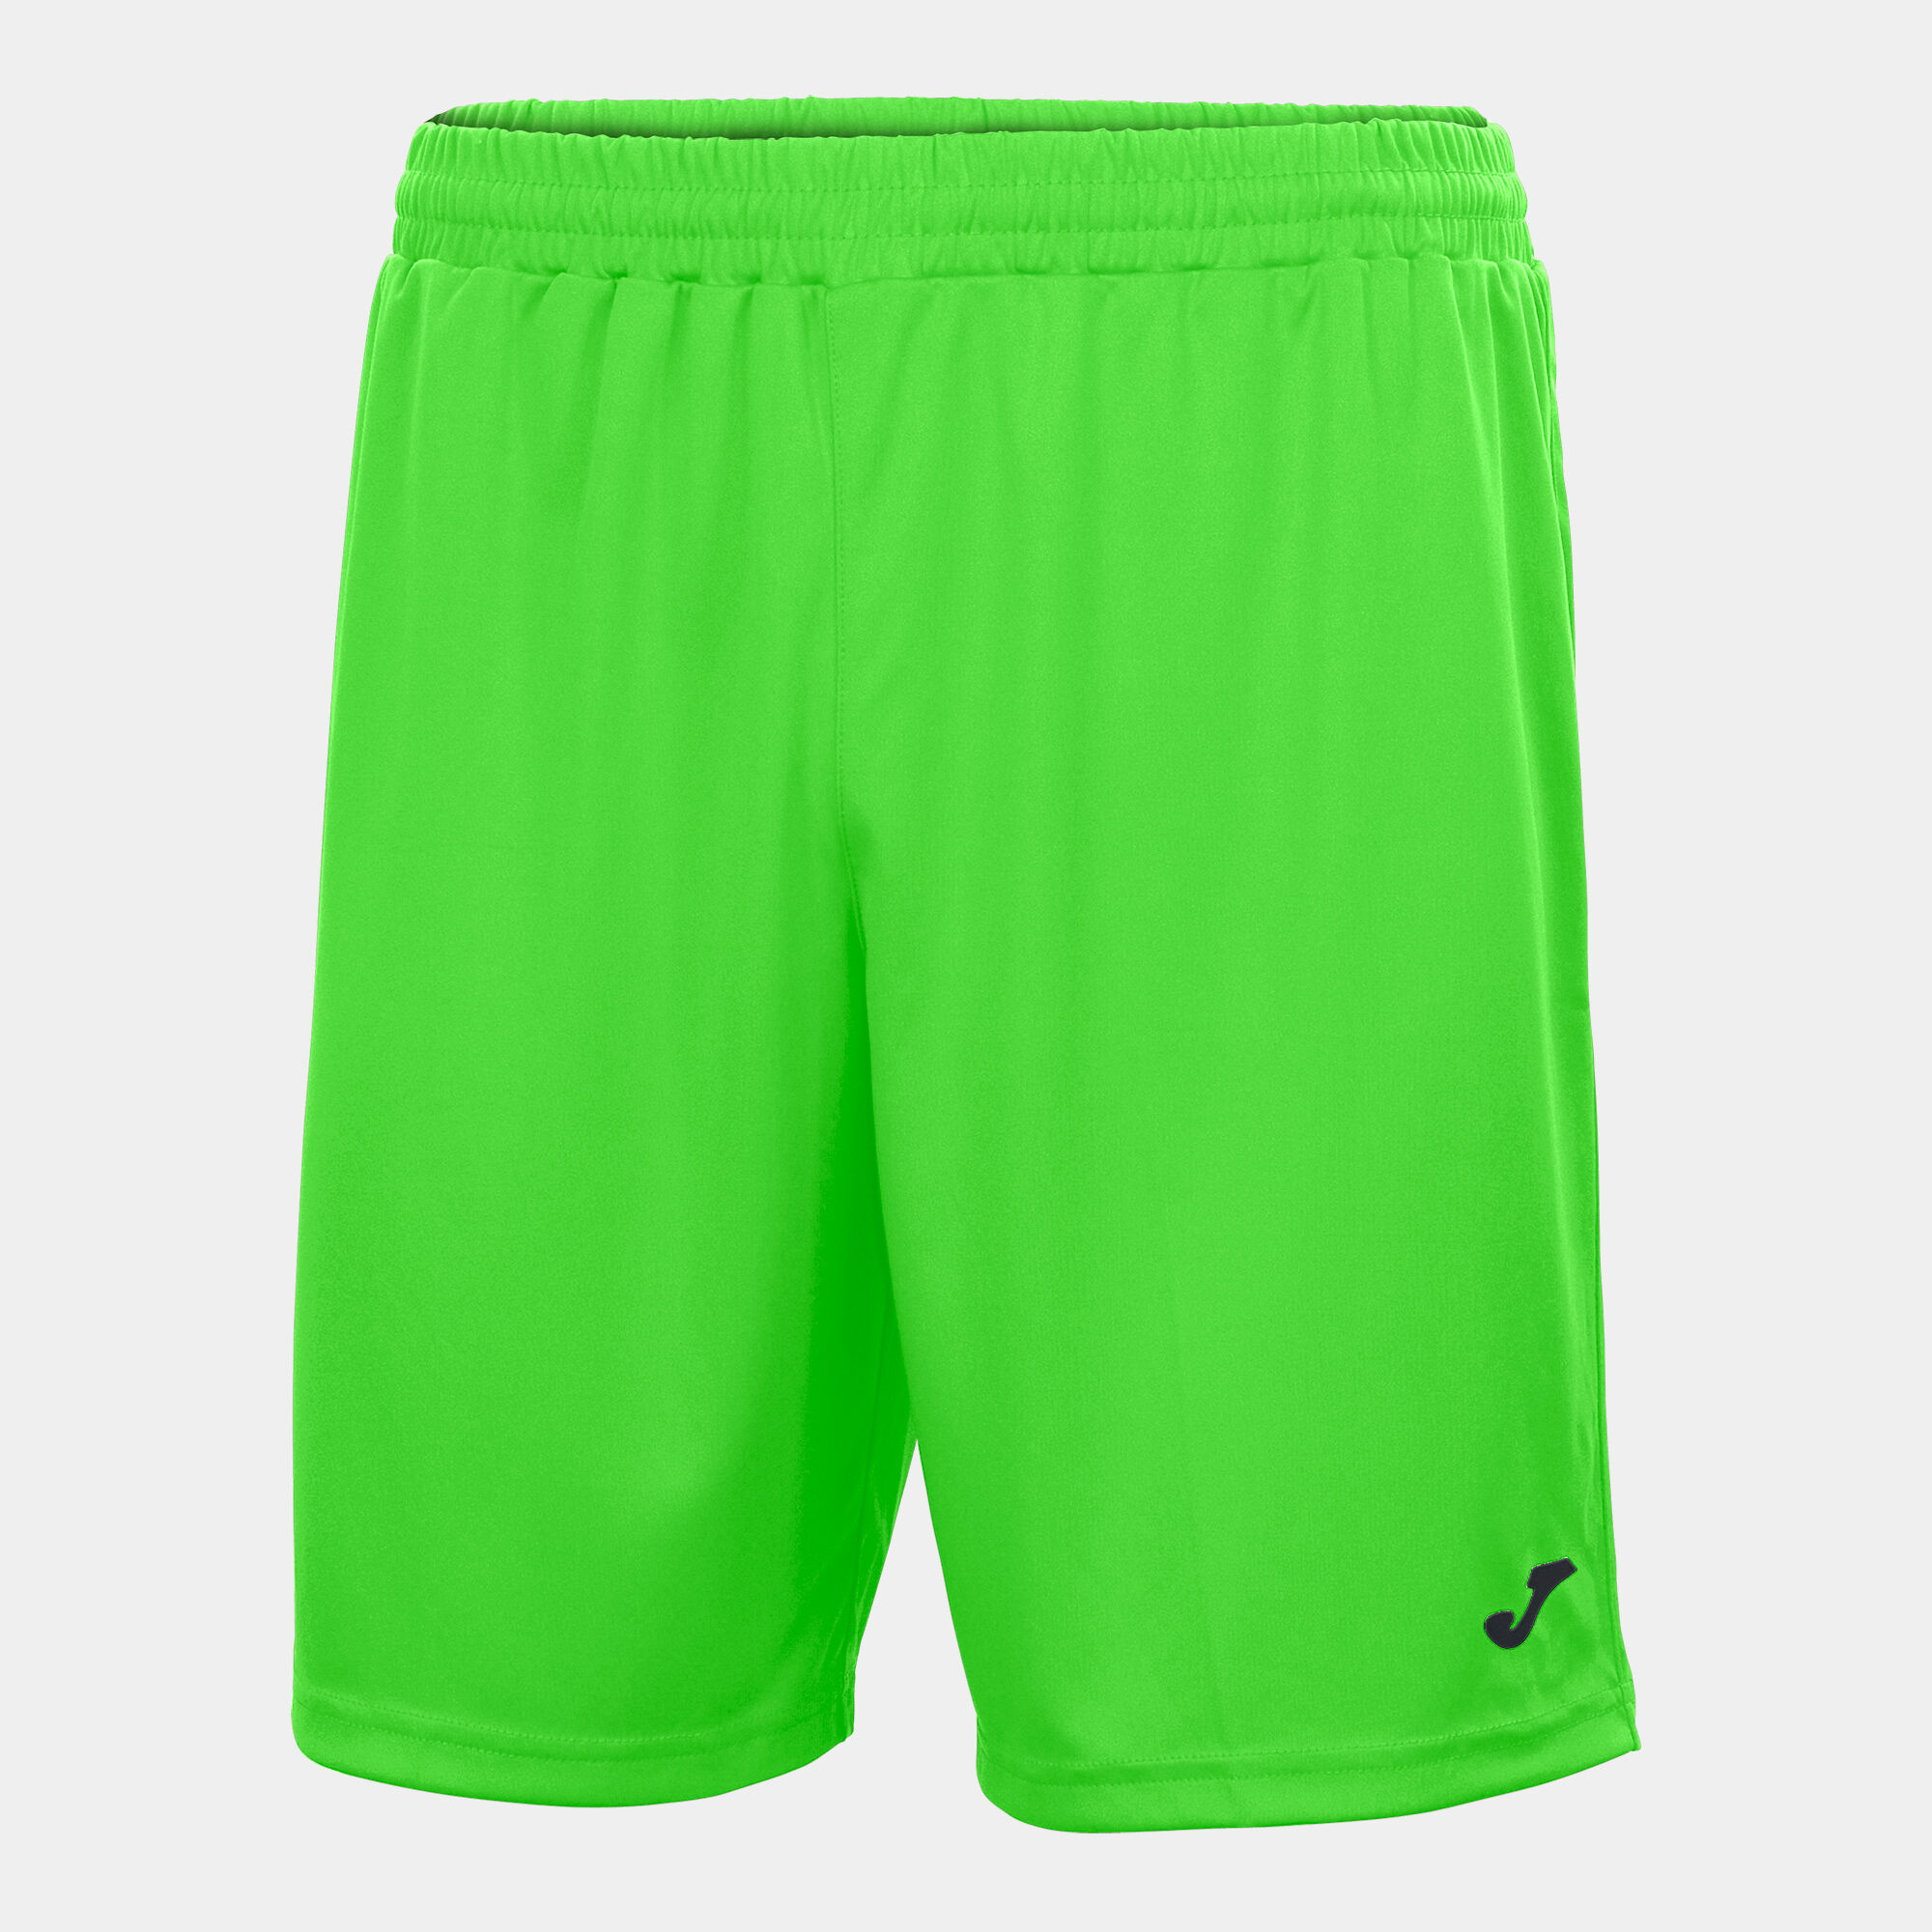 Shorts man Nobel fluorescent green